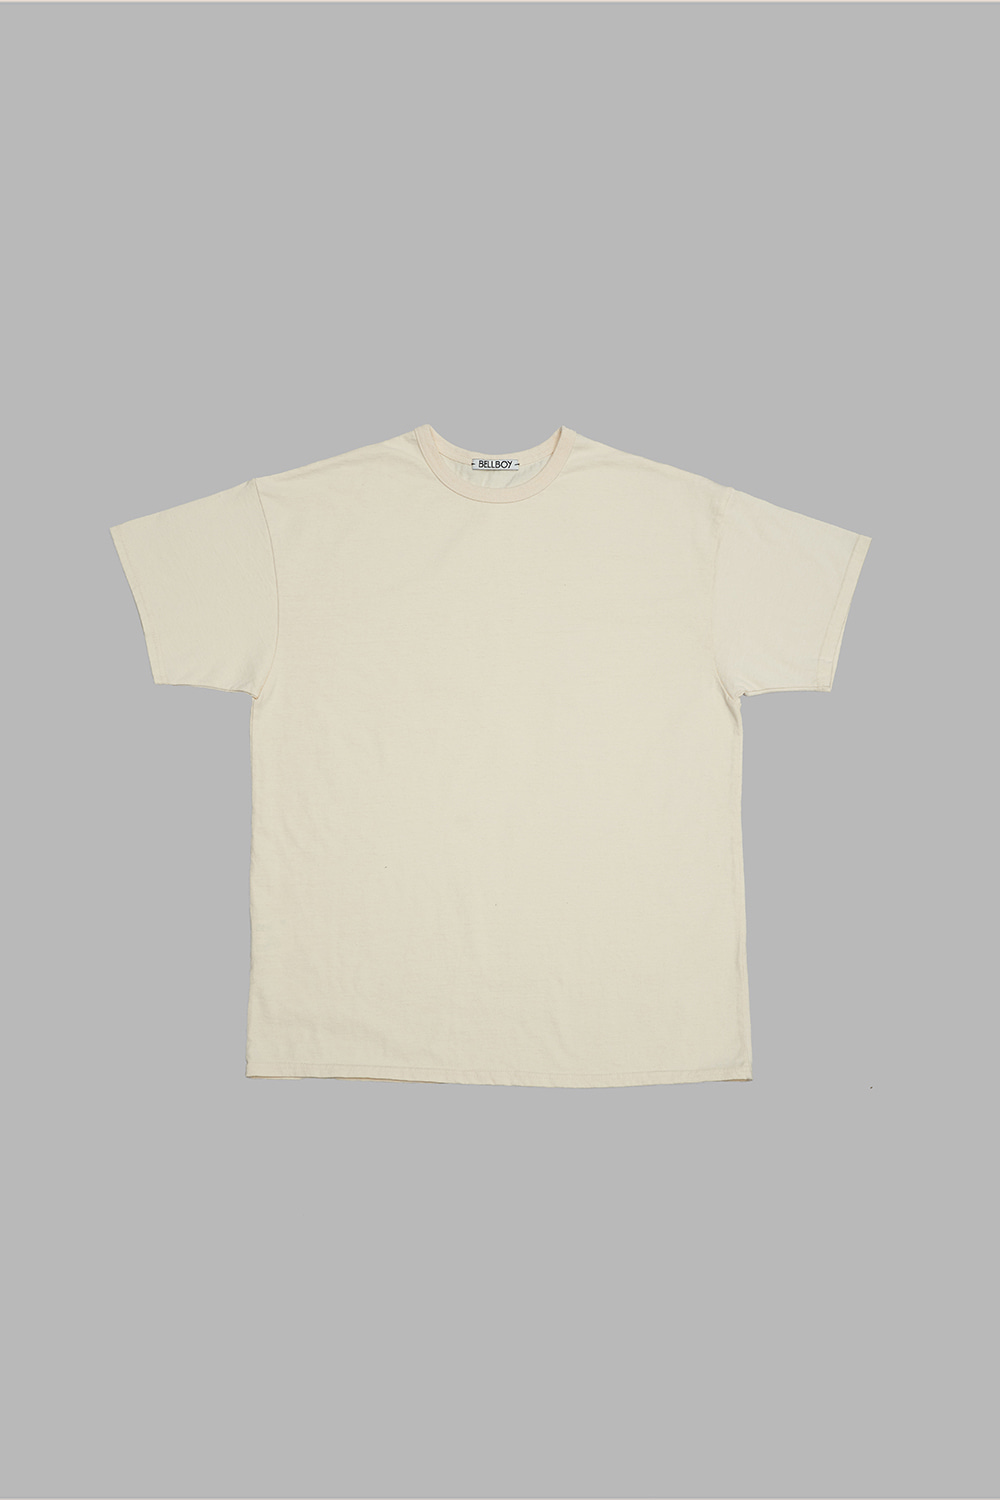 Washed Mid Weight T-Shirts - Carpenter 티셔츠, 워시드 헤비웨이트 티셔츠, 옥스포드셔츠, 버튼다운셔츠, 메신저백, 캔버스백